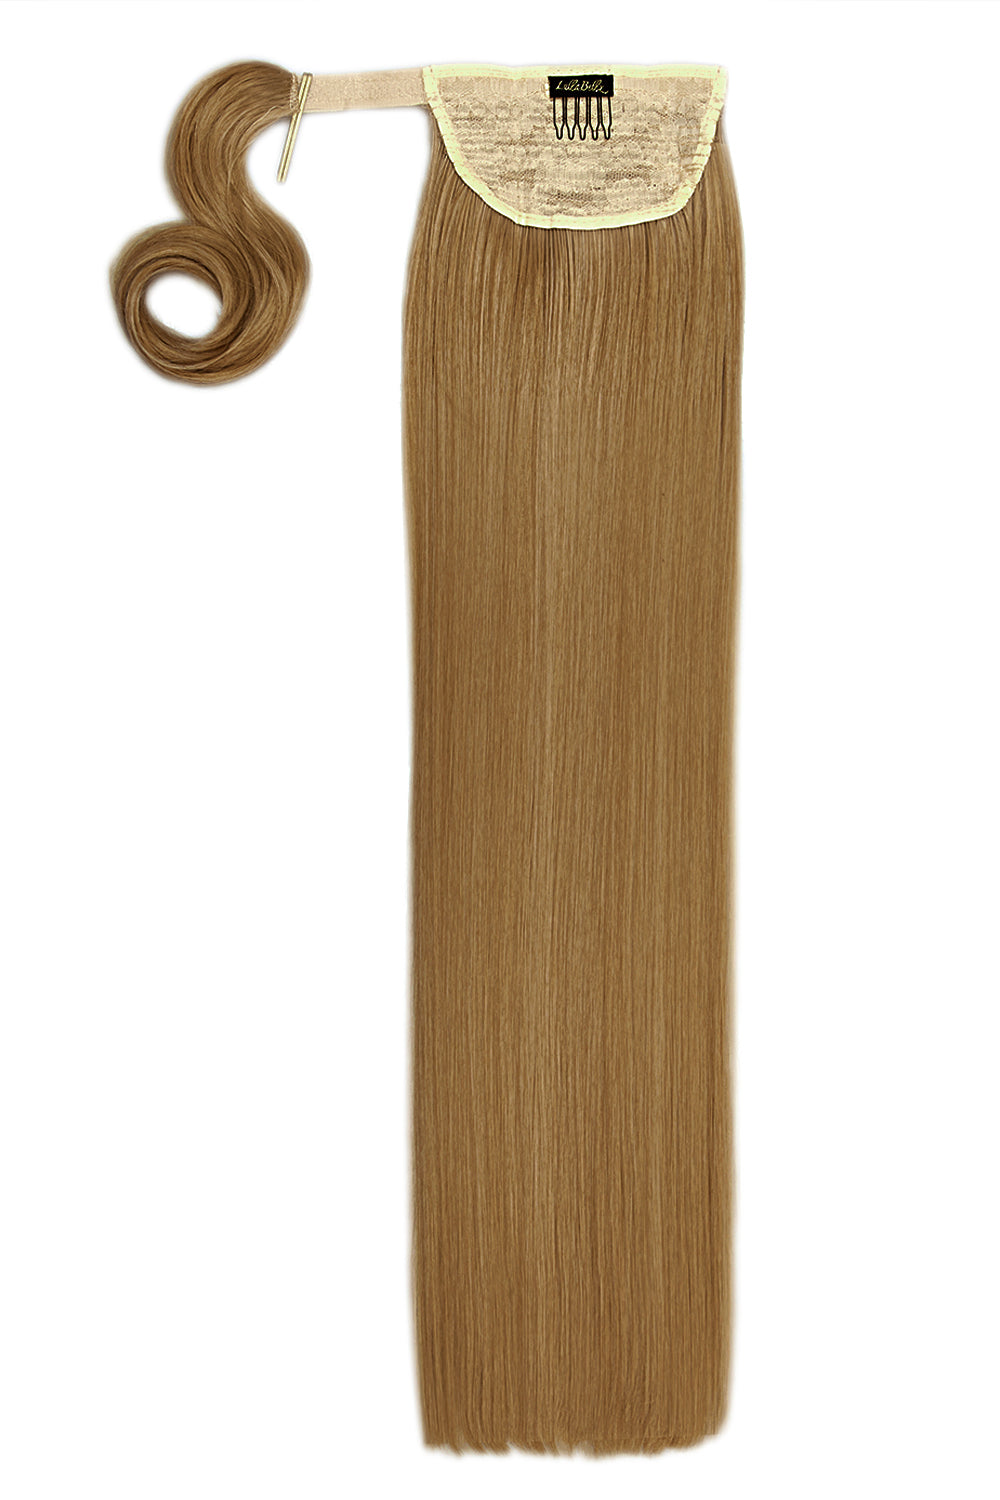 Grande Lengths 26" Straight Wraparound Ponytail - Harvest Blonde